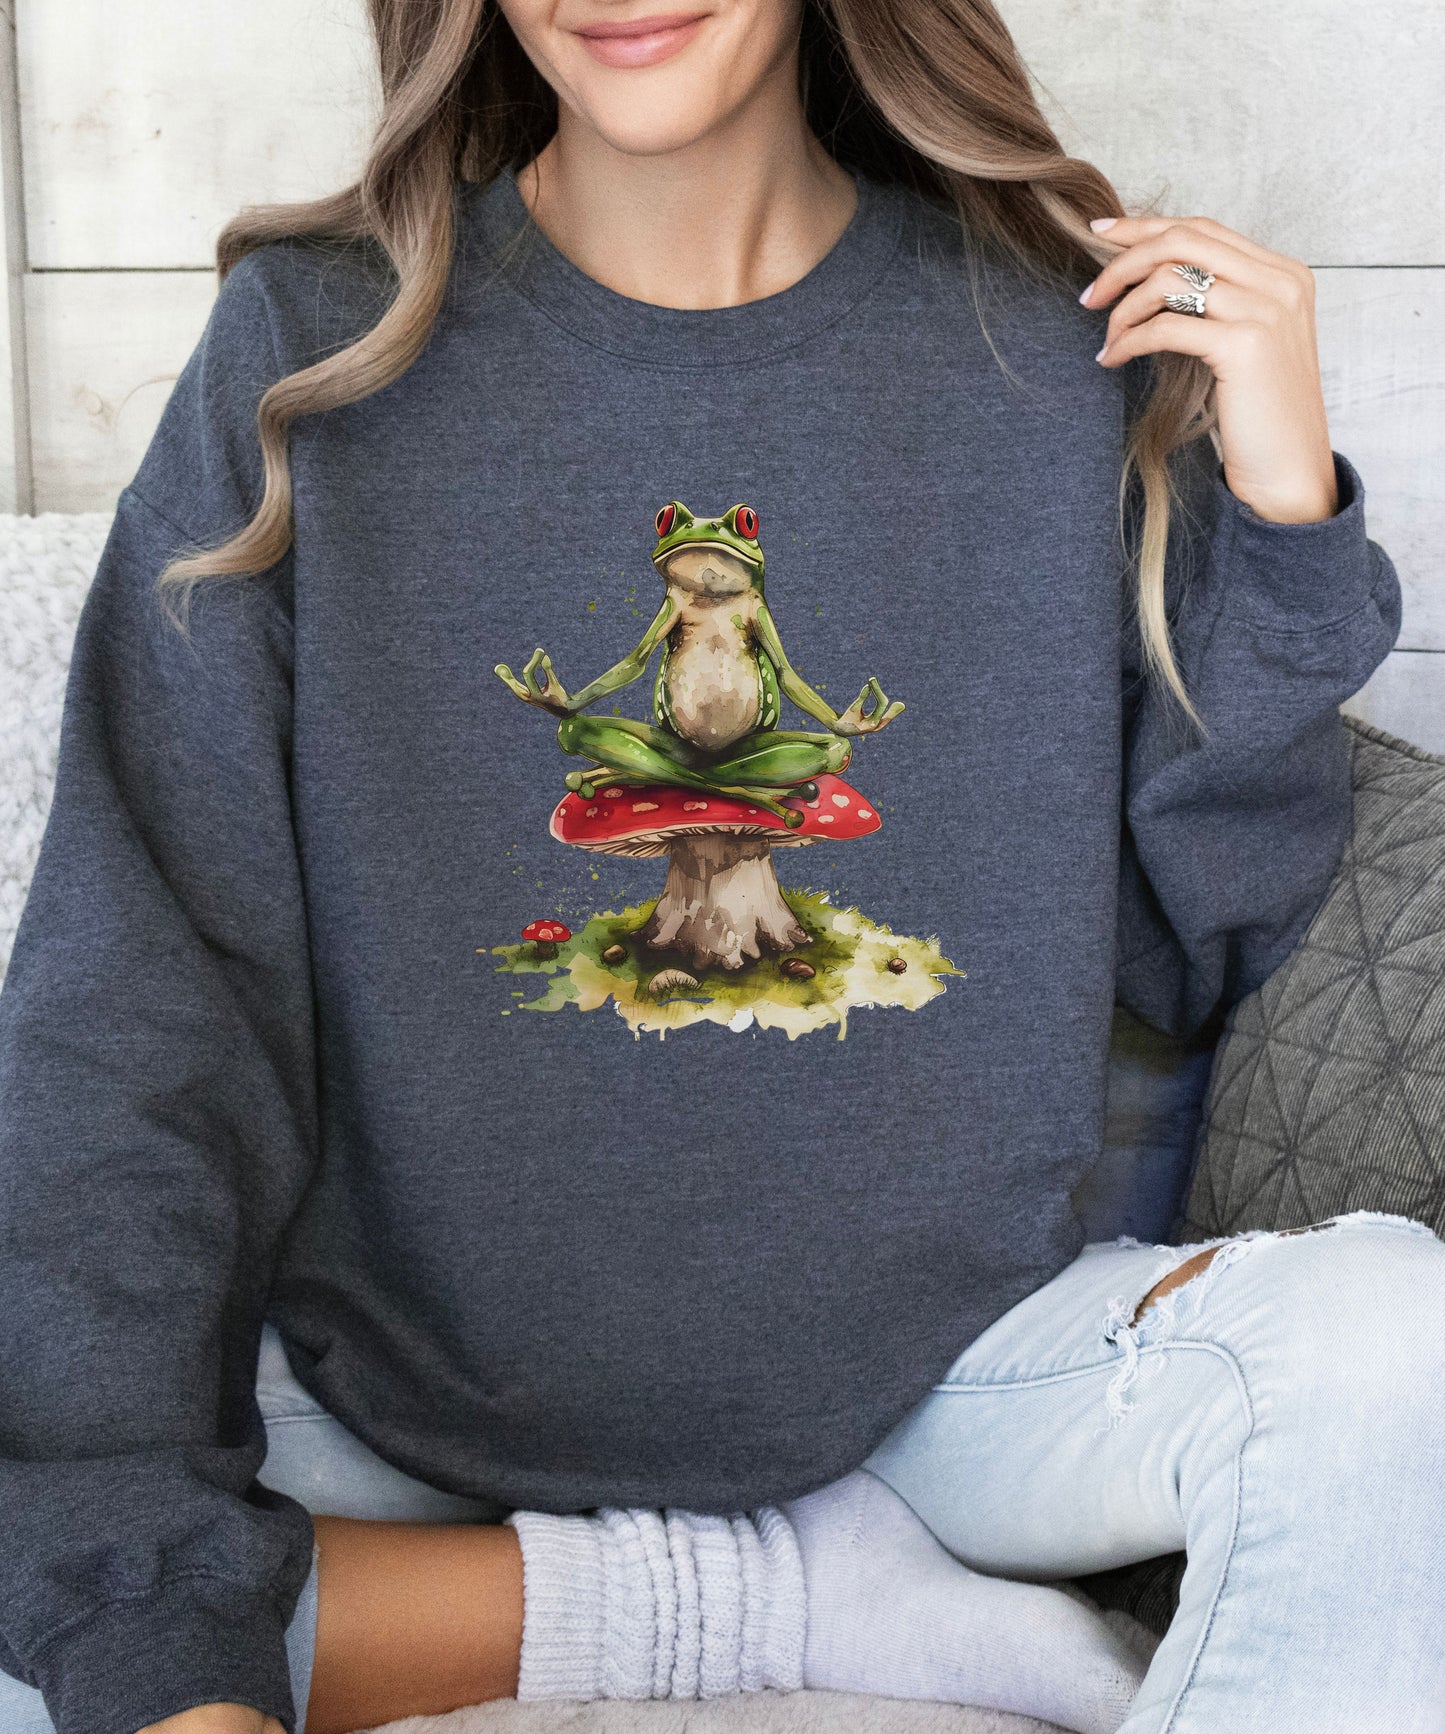 Retro frog sweatshirt